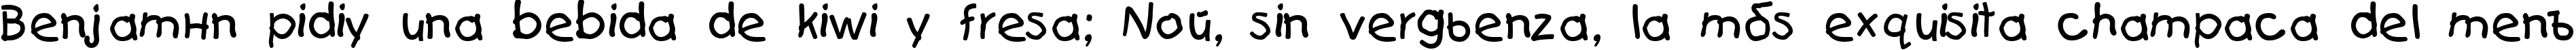 Пример написания шрифтом Teslic`s Document Cyr Normal текста на испанском